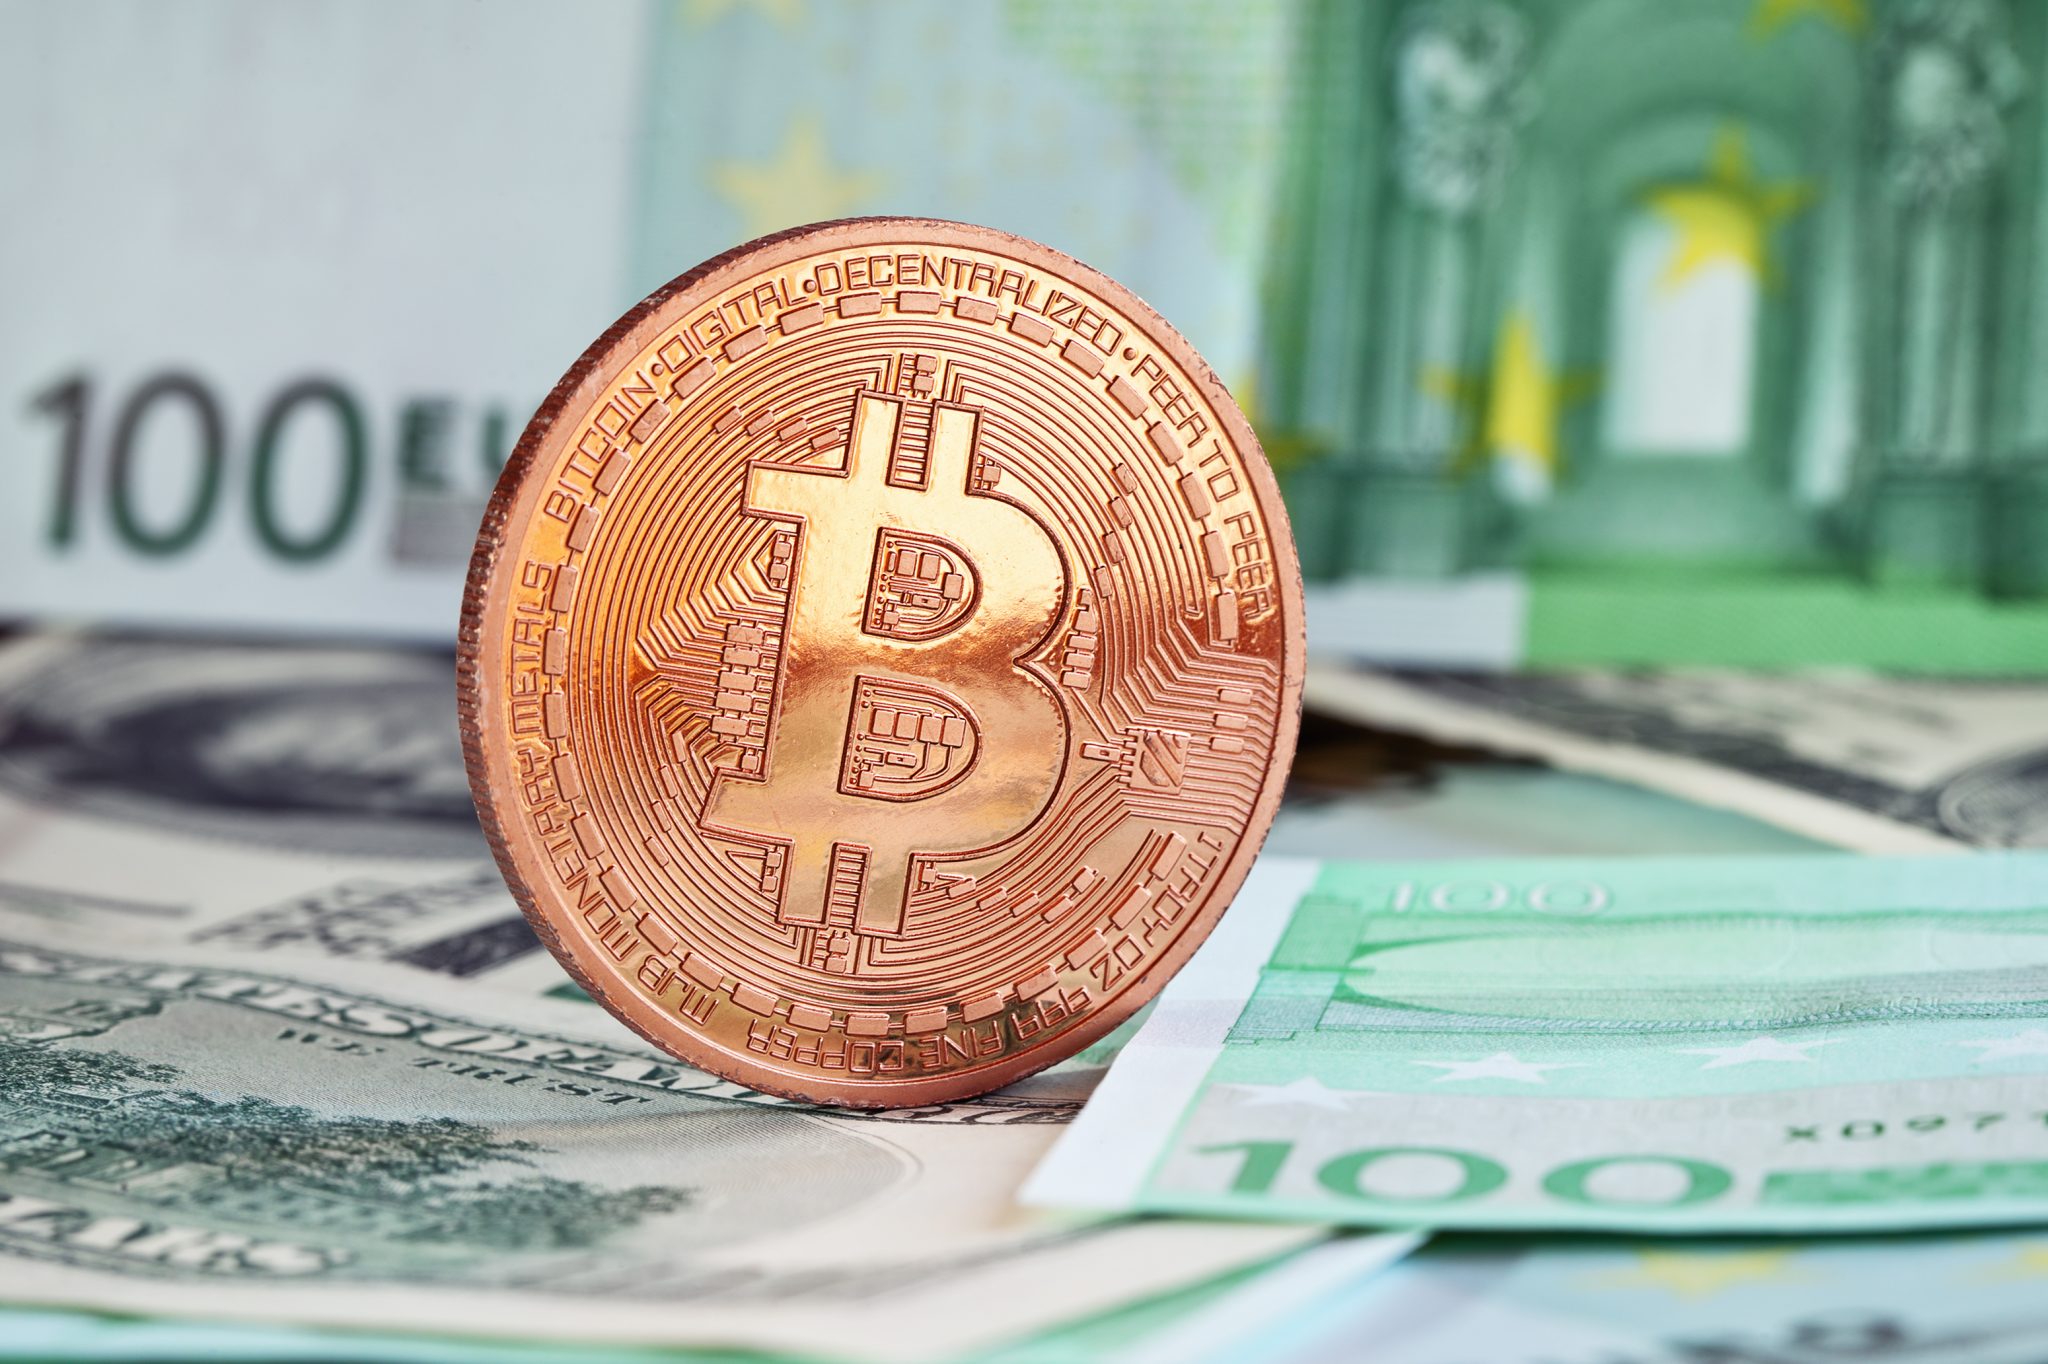 3iQ Bitcoin Funds (QBTC) listed on Nasdaq Dubai